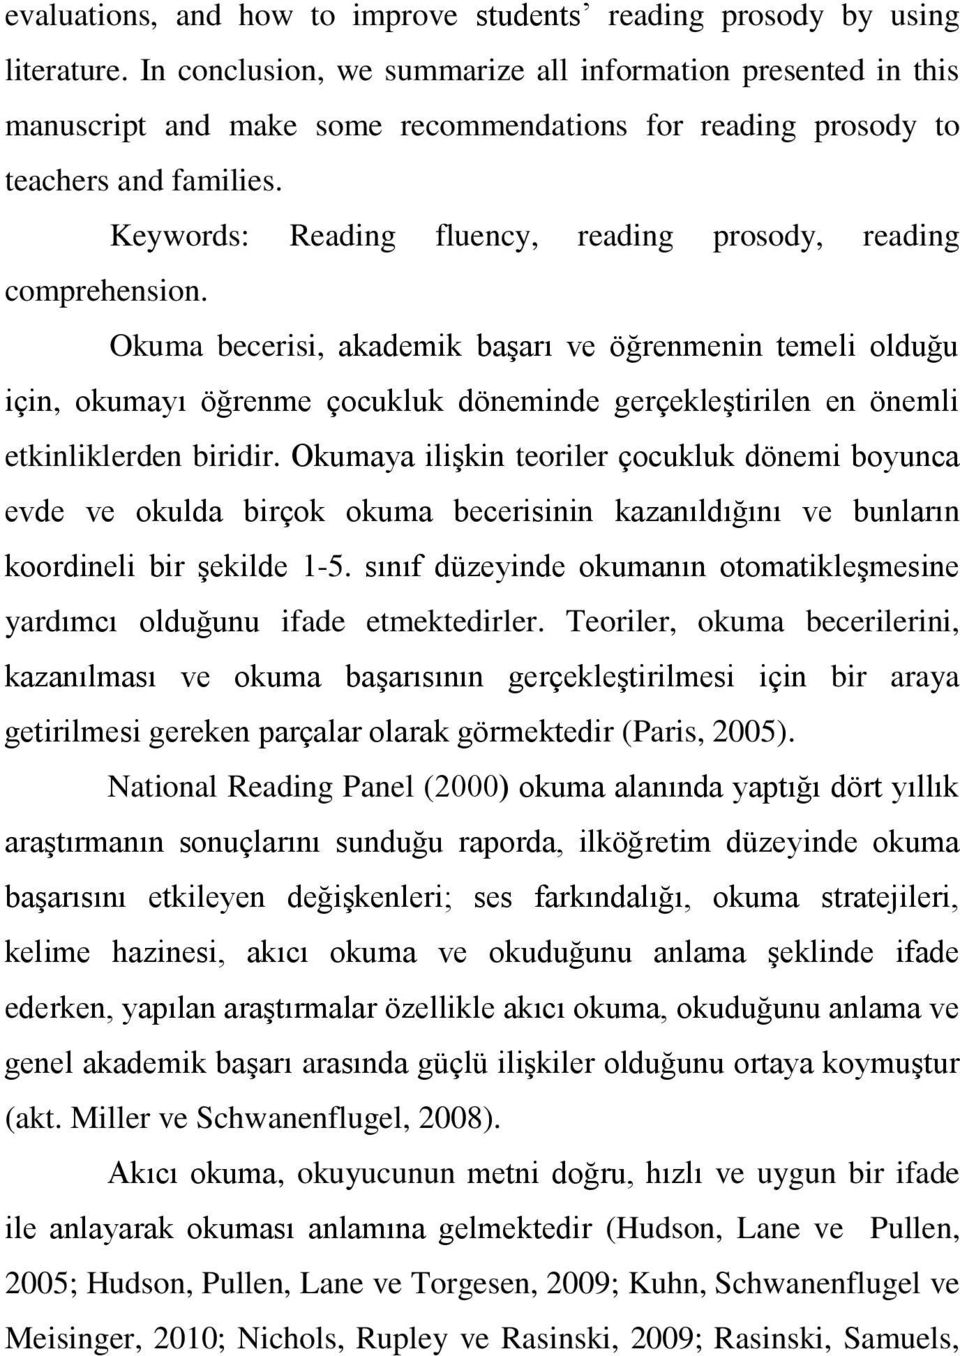 Keywords: Reading fluency, reading prosody, reading comprehension.